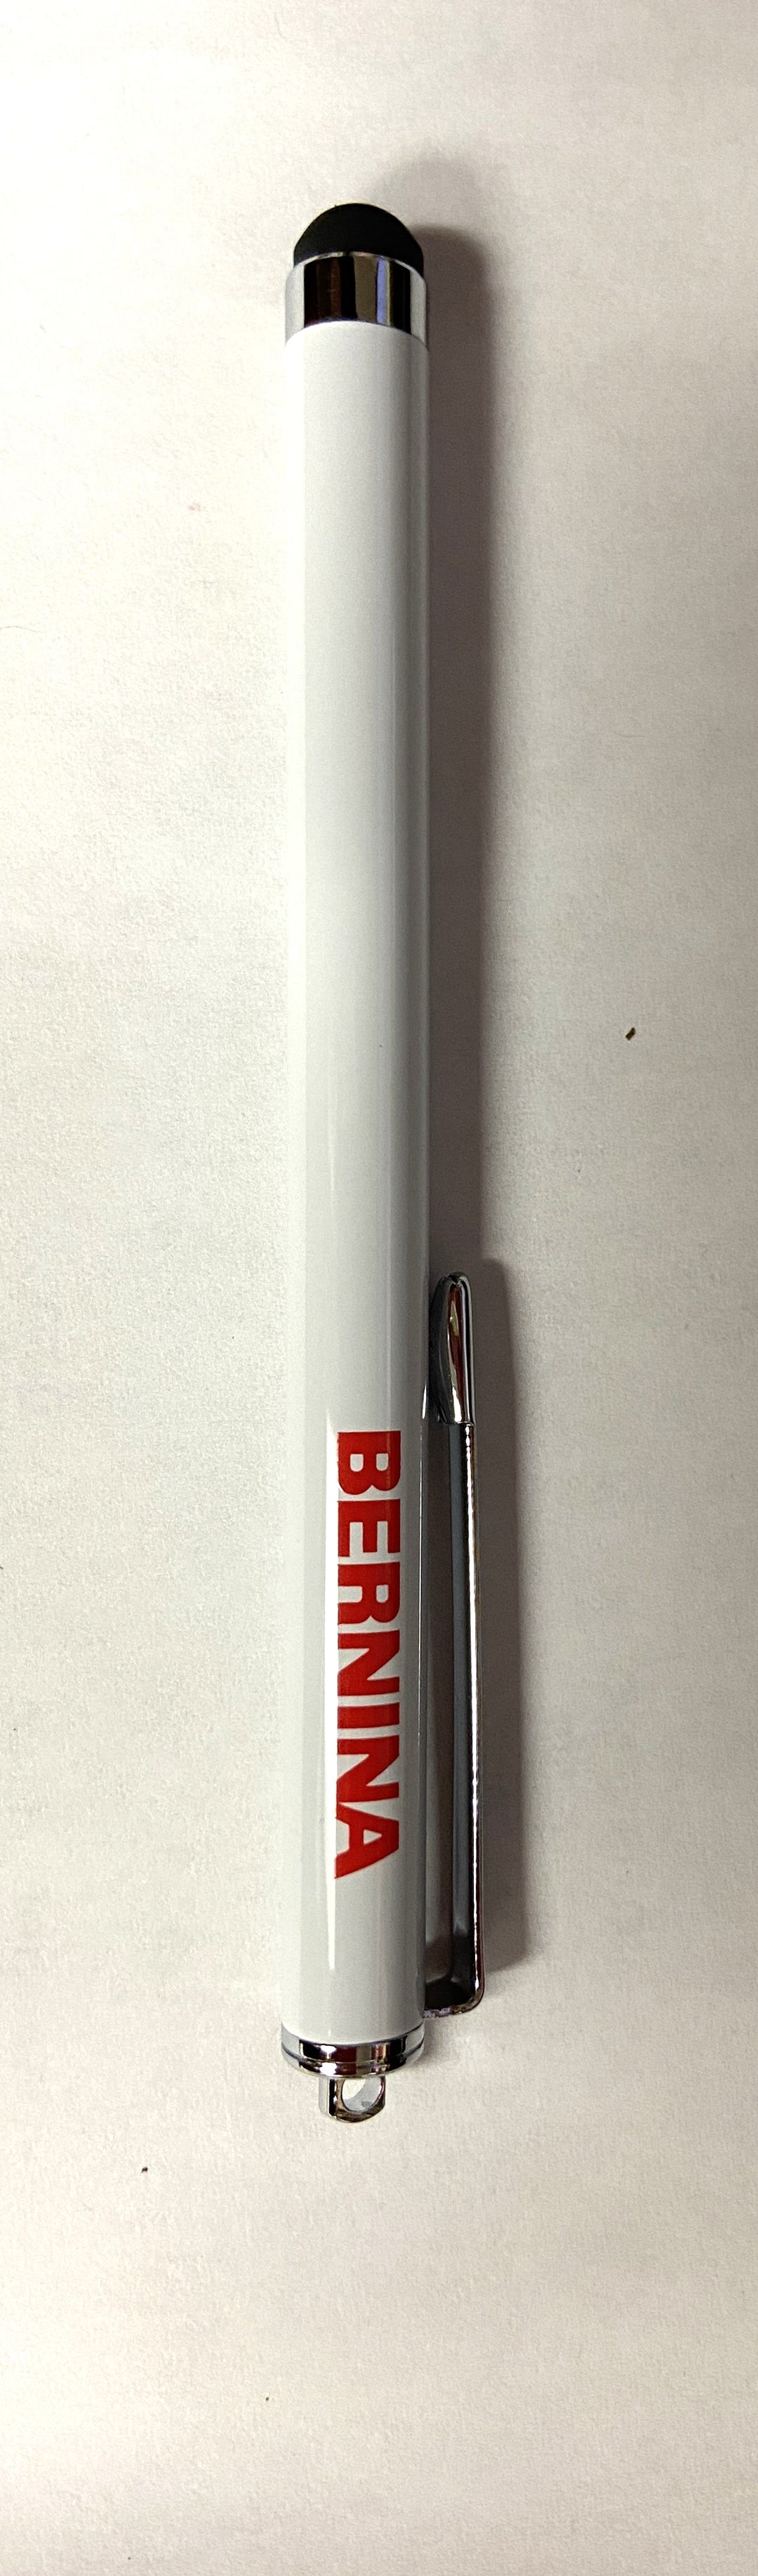 BERNINA touch pen 4/5 Series